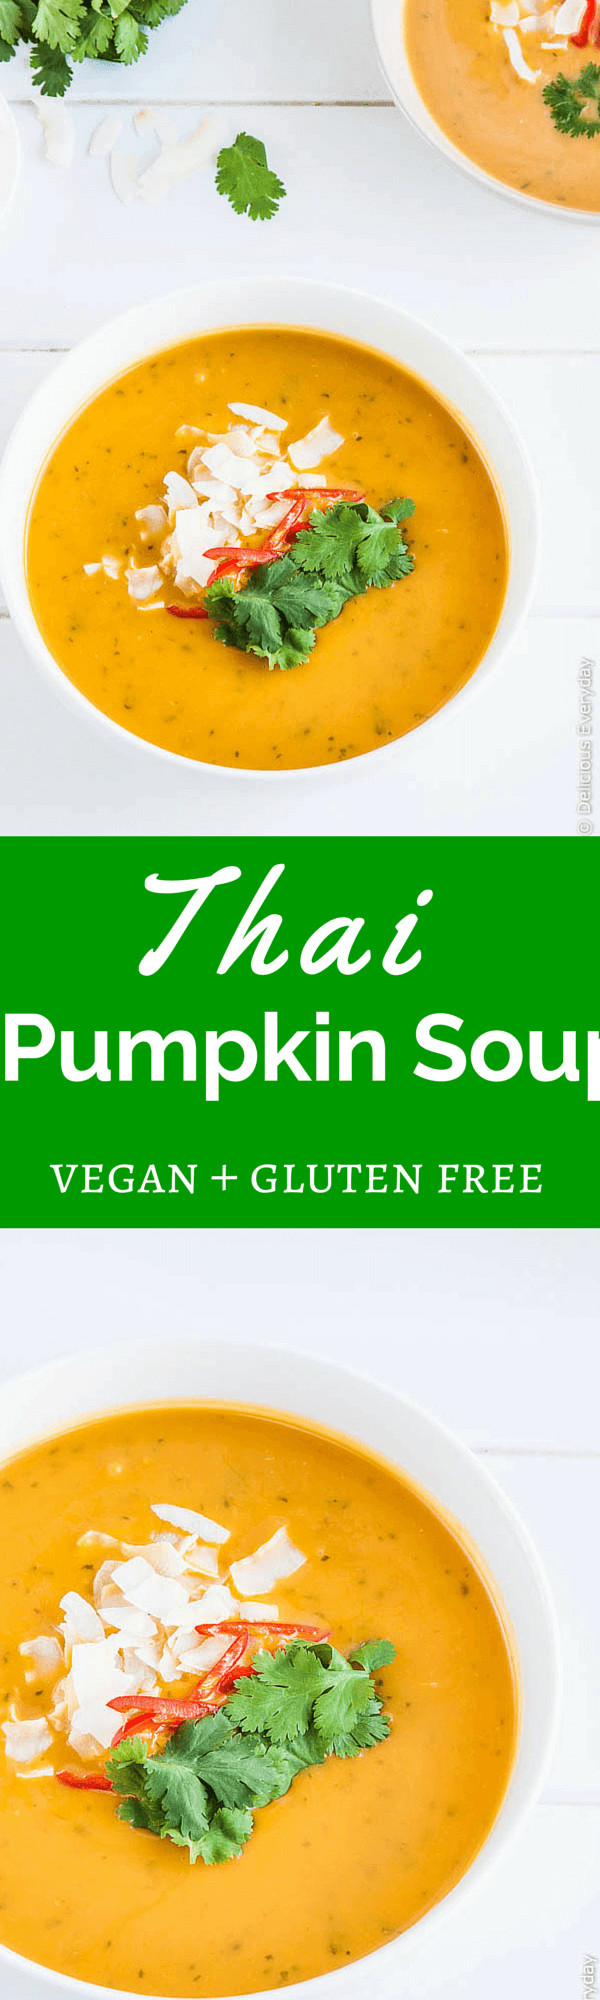 Coconut Milk Soup Recipes
 Thai Pumpkin Soup with Coconut Milk vegan